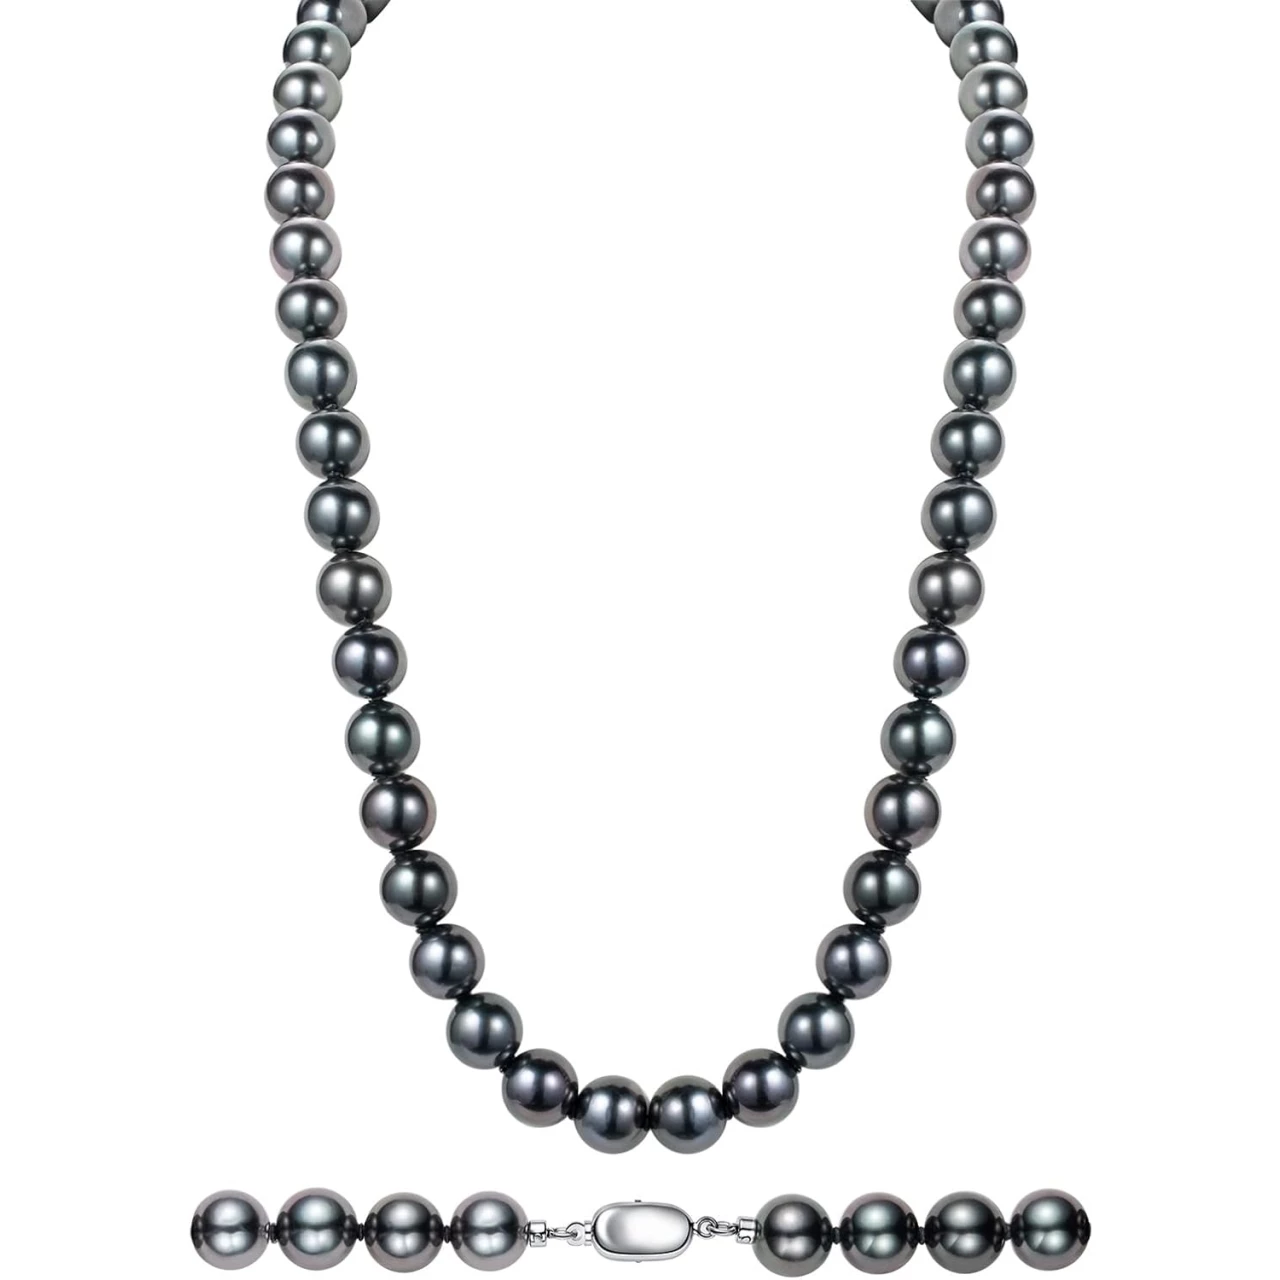 Genuine 9-10MM Tahitian Black Pearl Necklace, AAAA+ Quality Handpicked